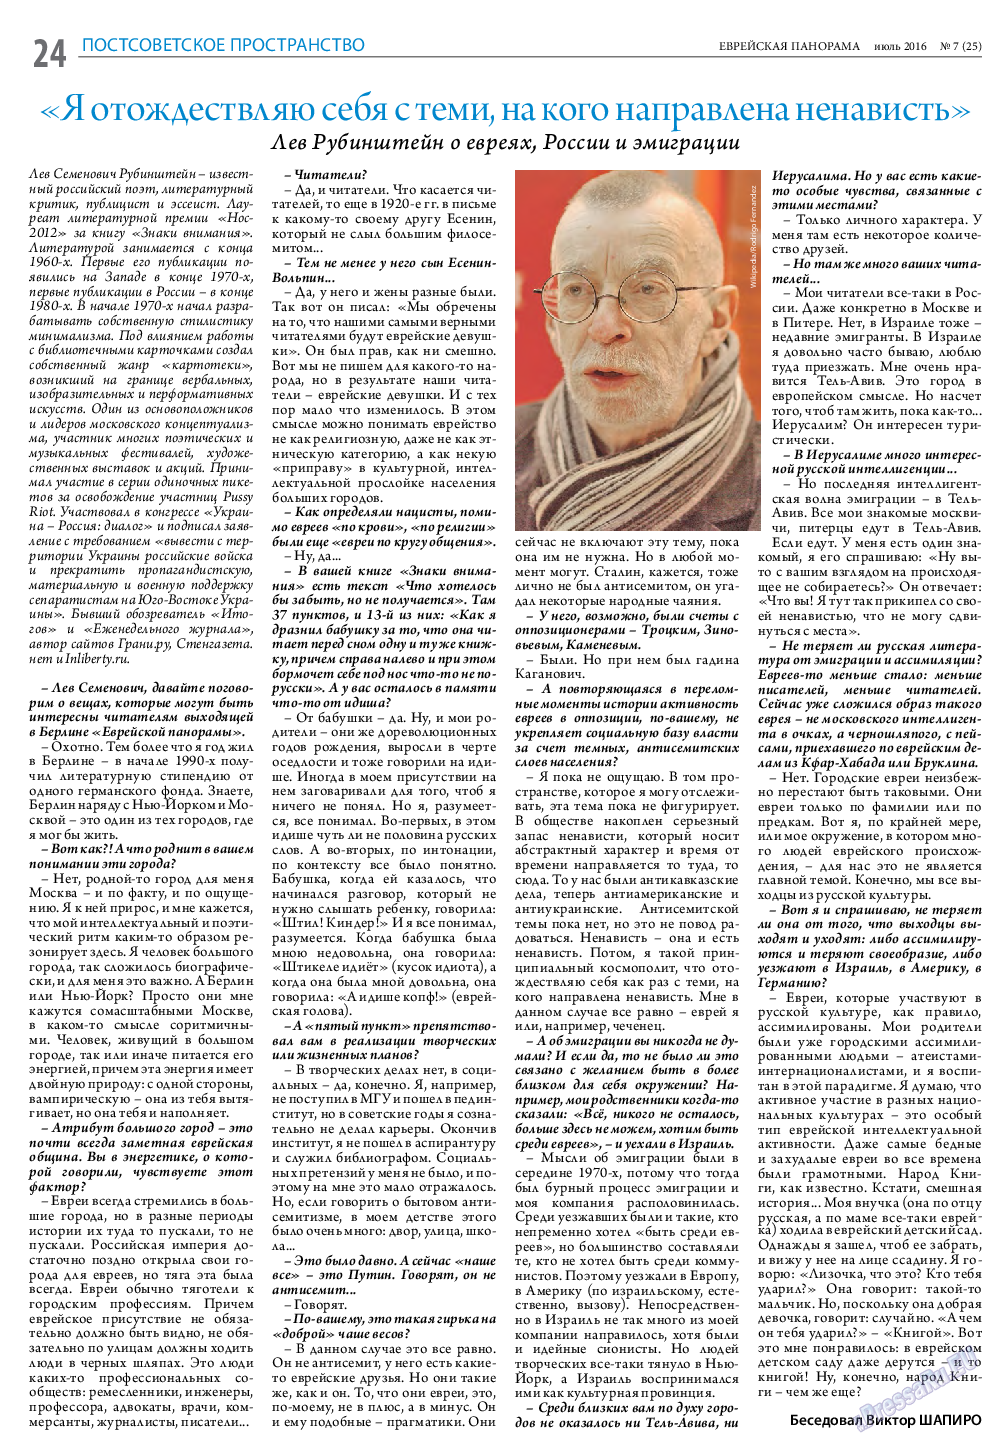 Еврейская панорама, газета. 2016 №7 стр.24